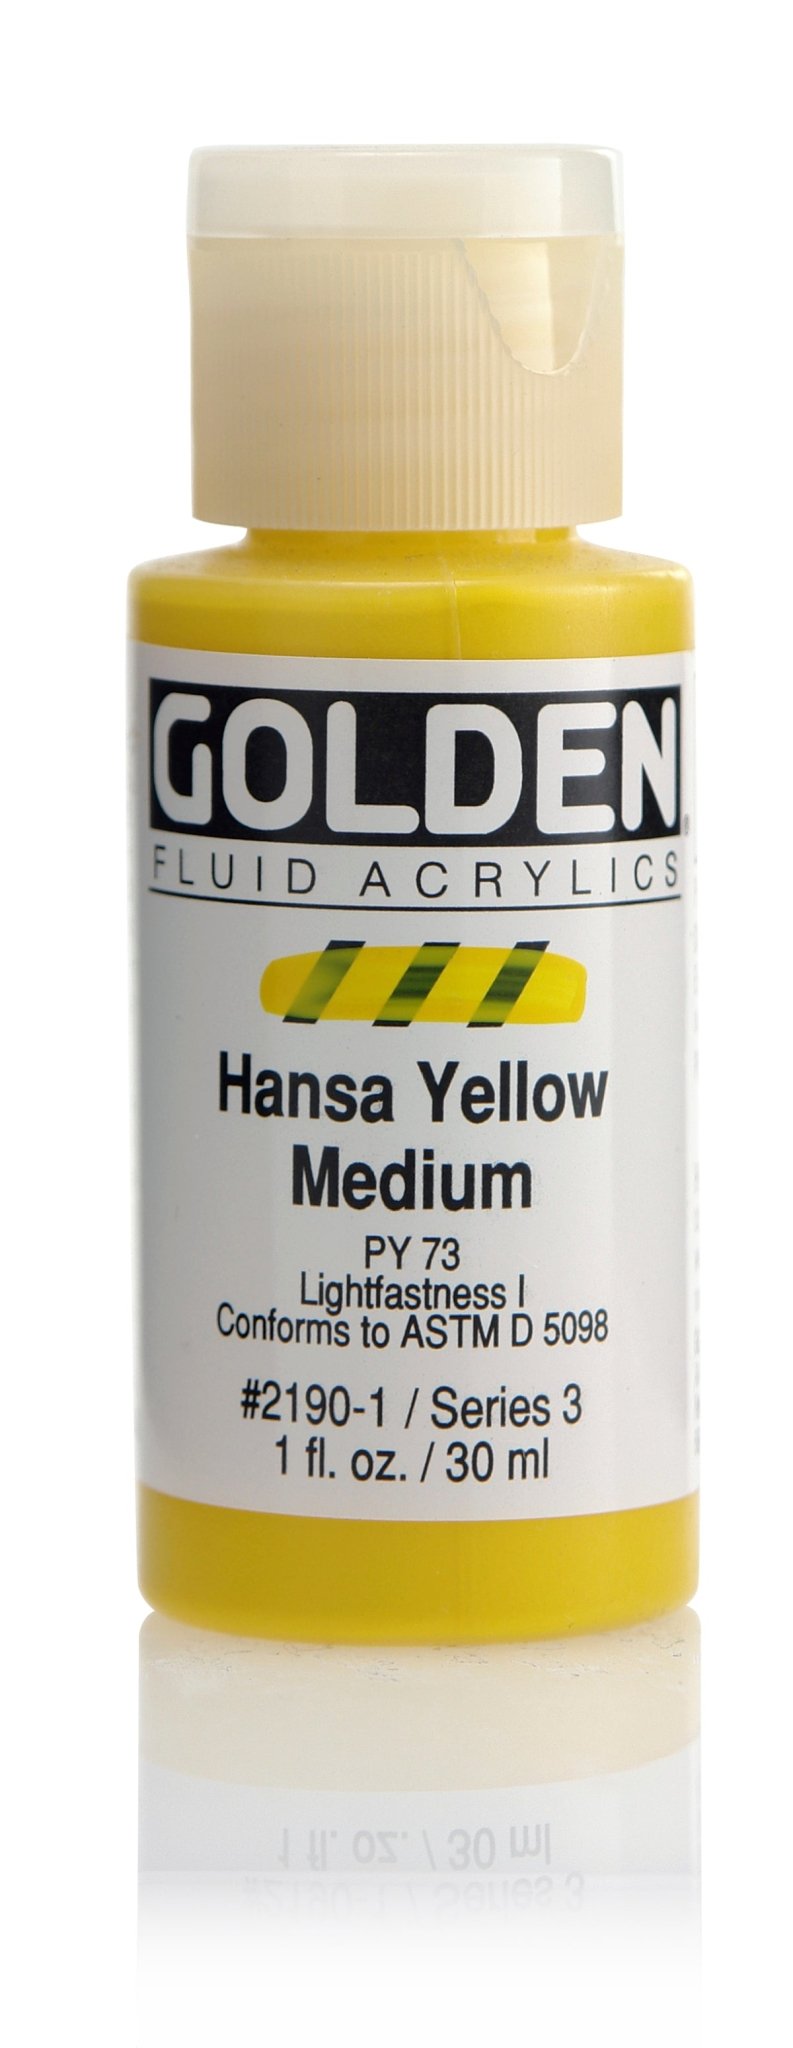 Golden Fluid Acrylics - Hansa Yellow Medium - 30ml - Create A Little Magic (Pty) Ltd